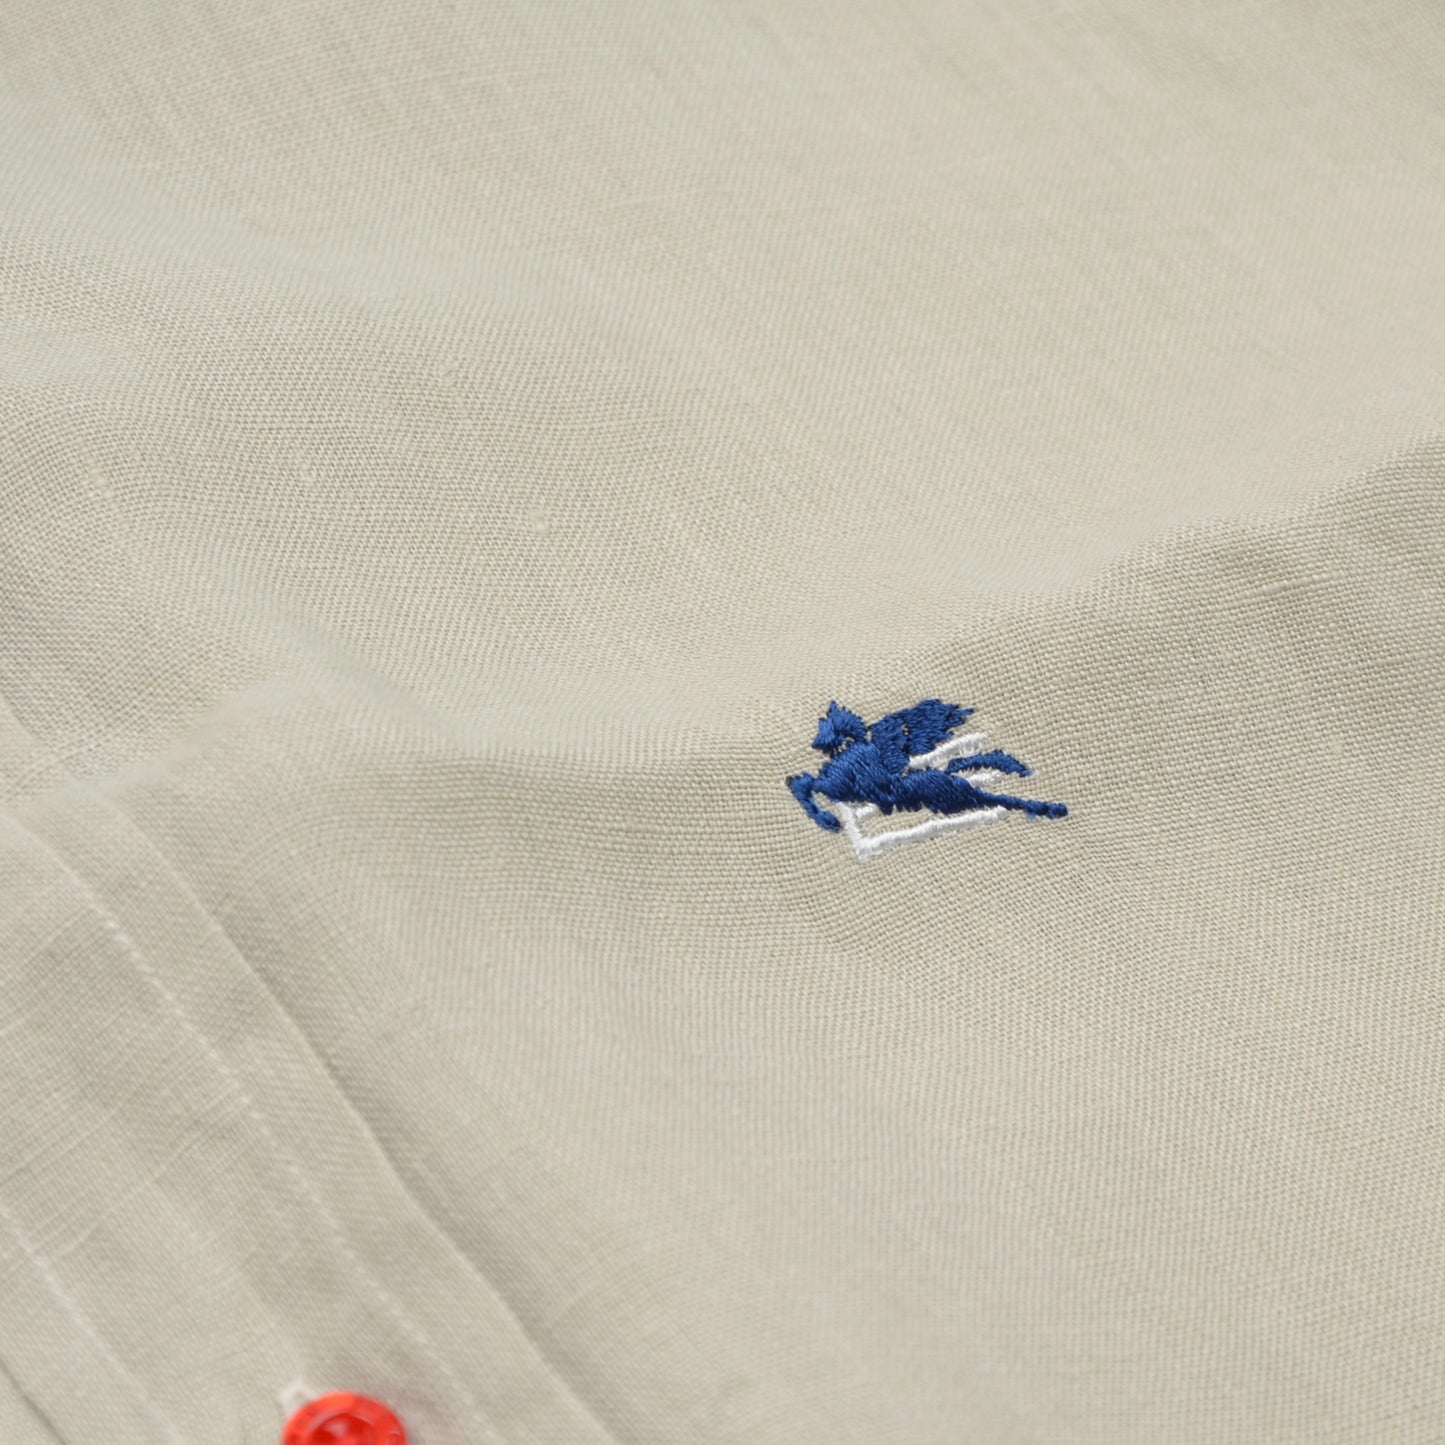 Etro Milano 100% Linen Shirt Size 39 - Sand